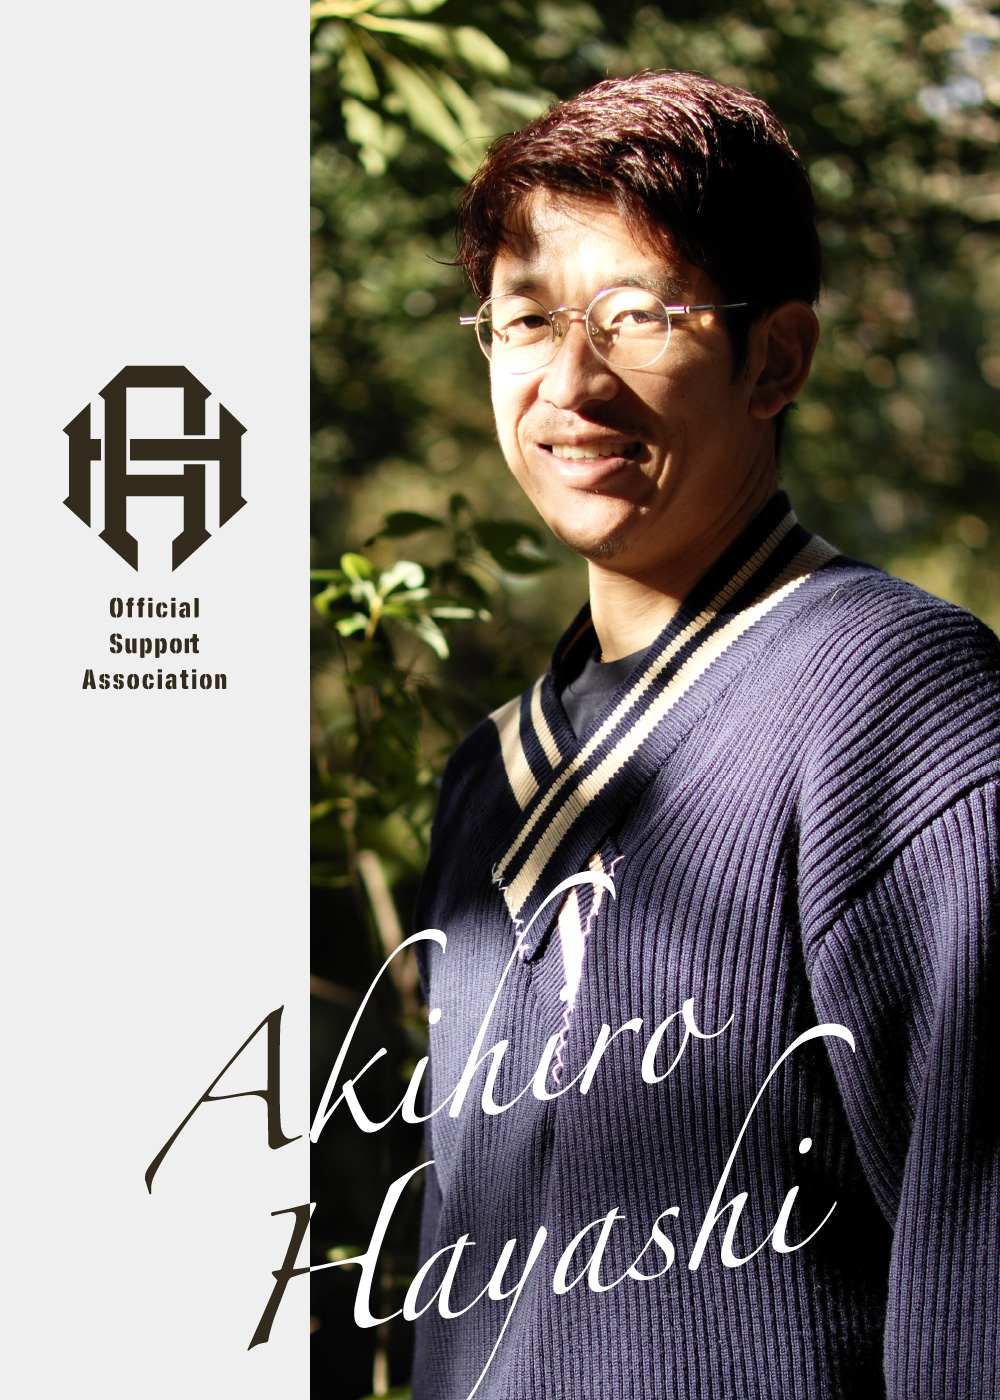 Official Support Association Akihiro Hayashi